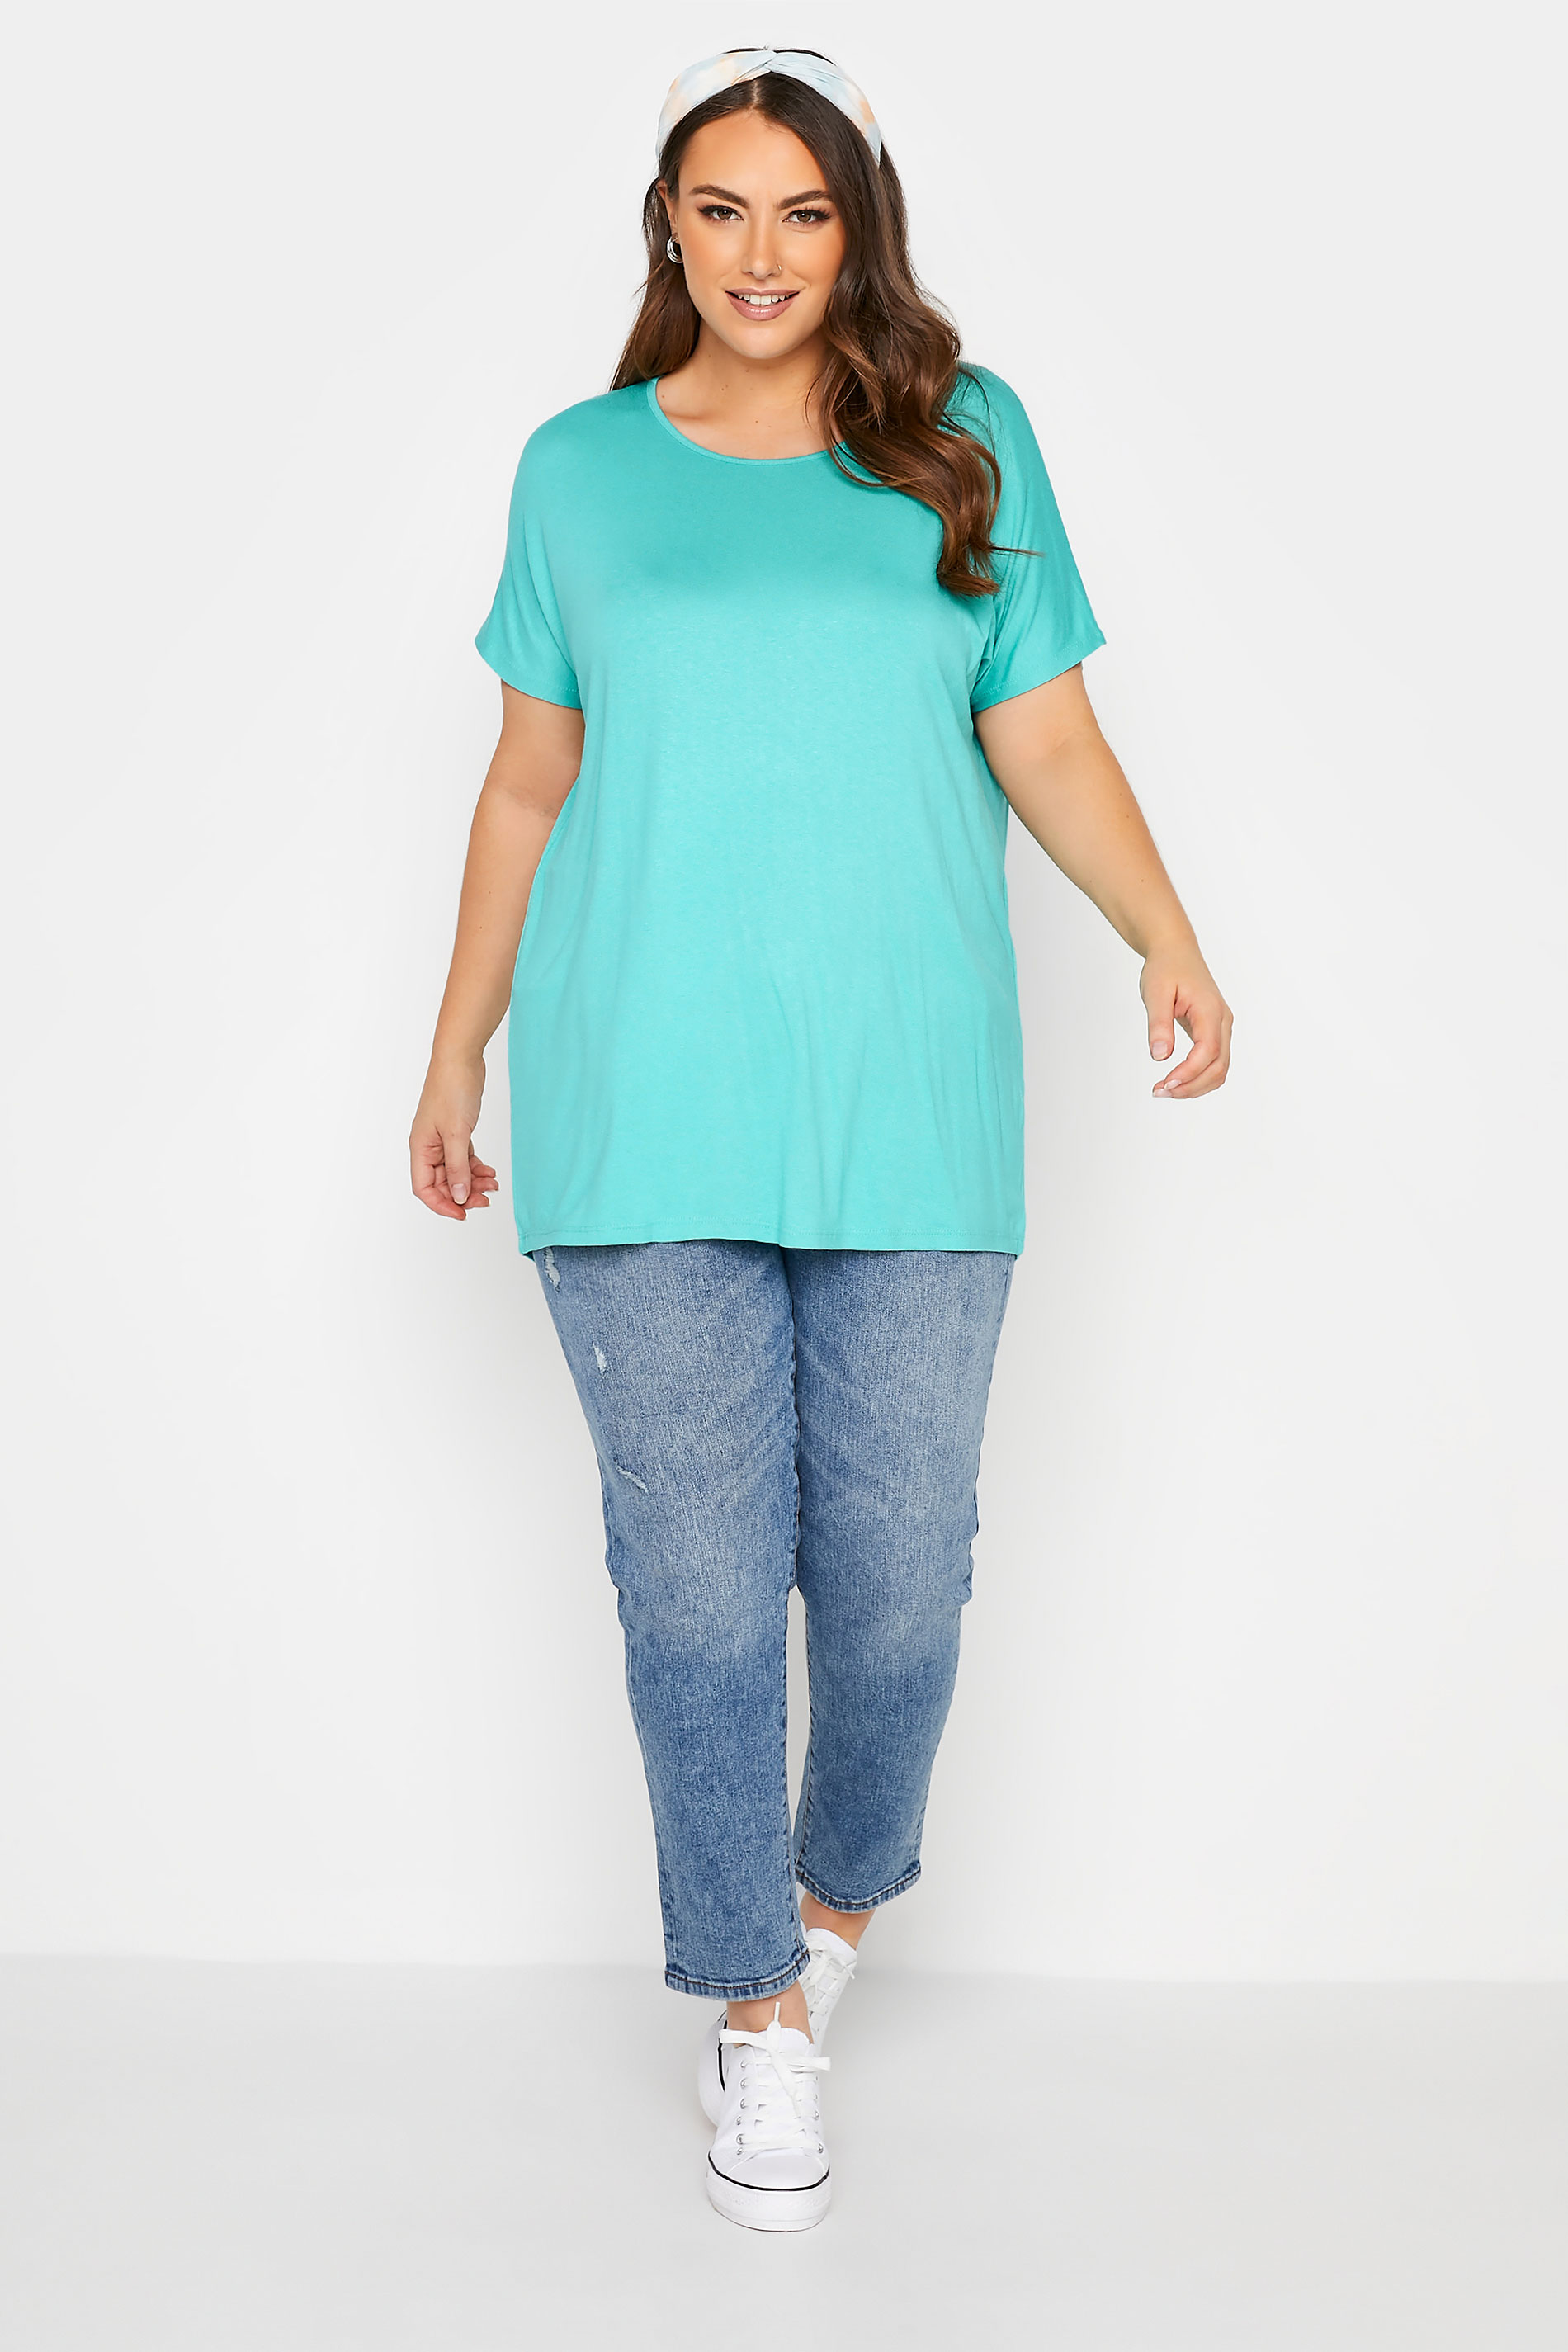 Grande taille  Tops Grande taille  T-Shirts | T-Shirt Bleu Turquoise Manches Courtes en Jersey - DZ28805